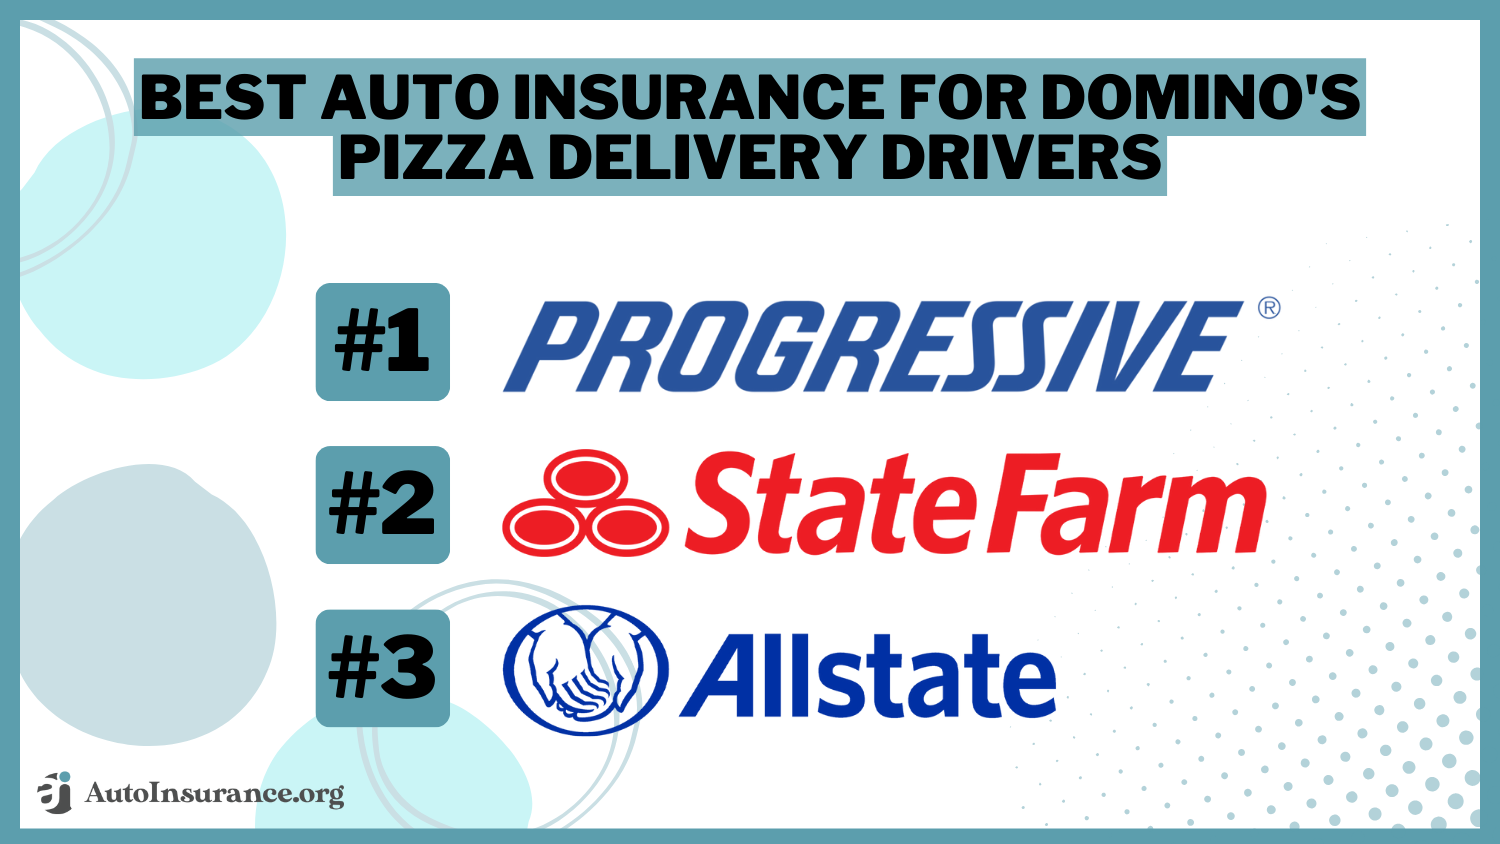 Best Auto Insurance for Domino's Pizza Delivery Drivers: Progressive, State Farm, and Allstate